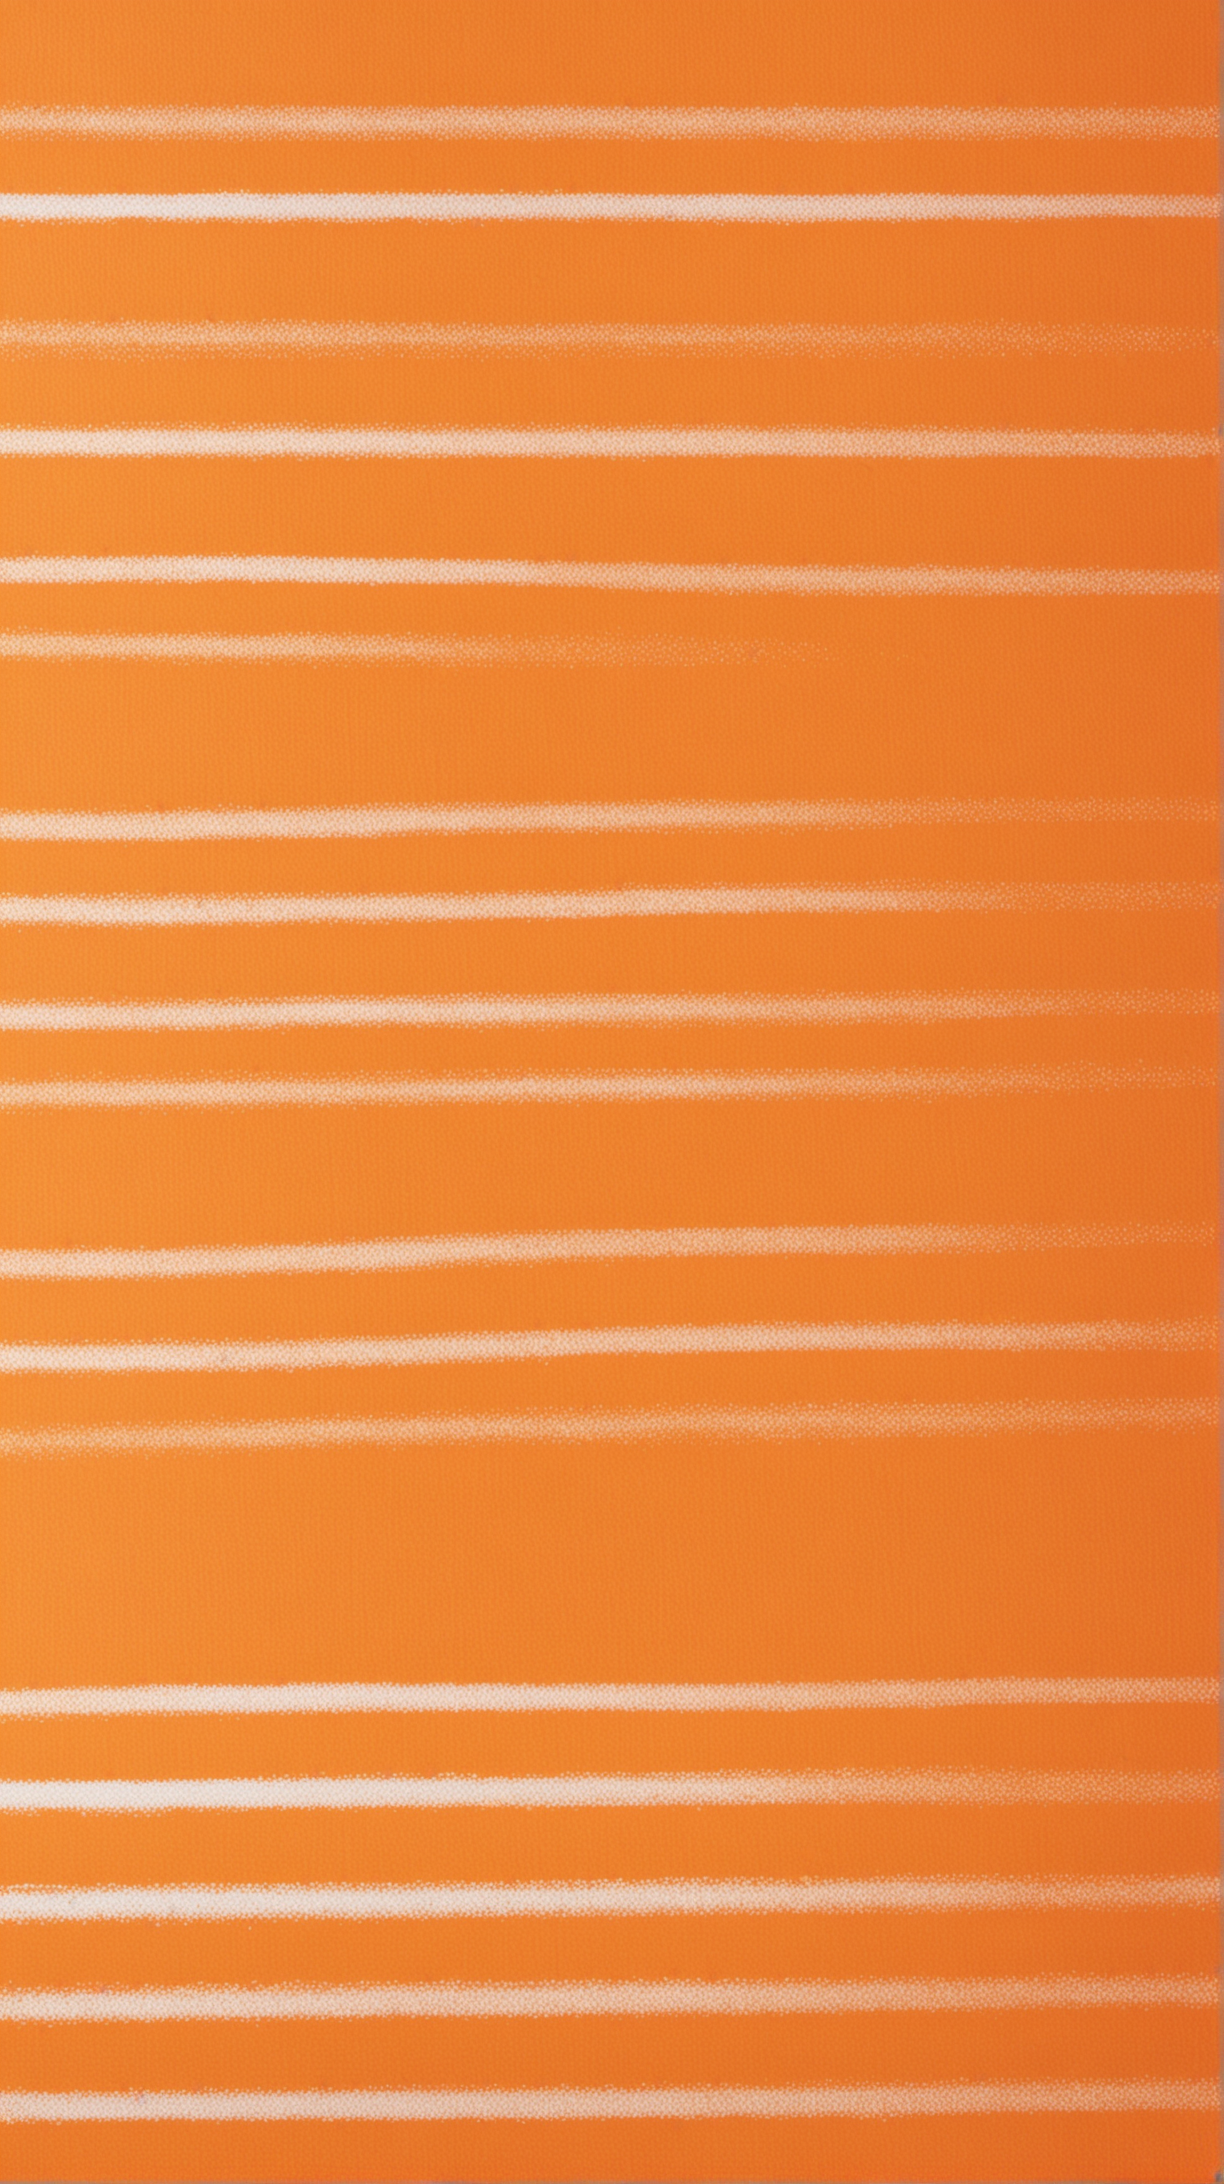 Vibrant Orange Background with White Horizontal Lines